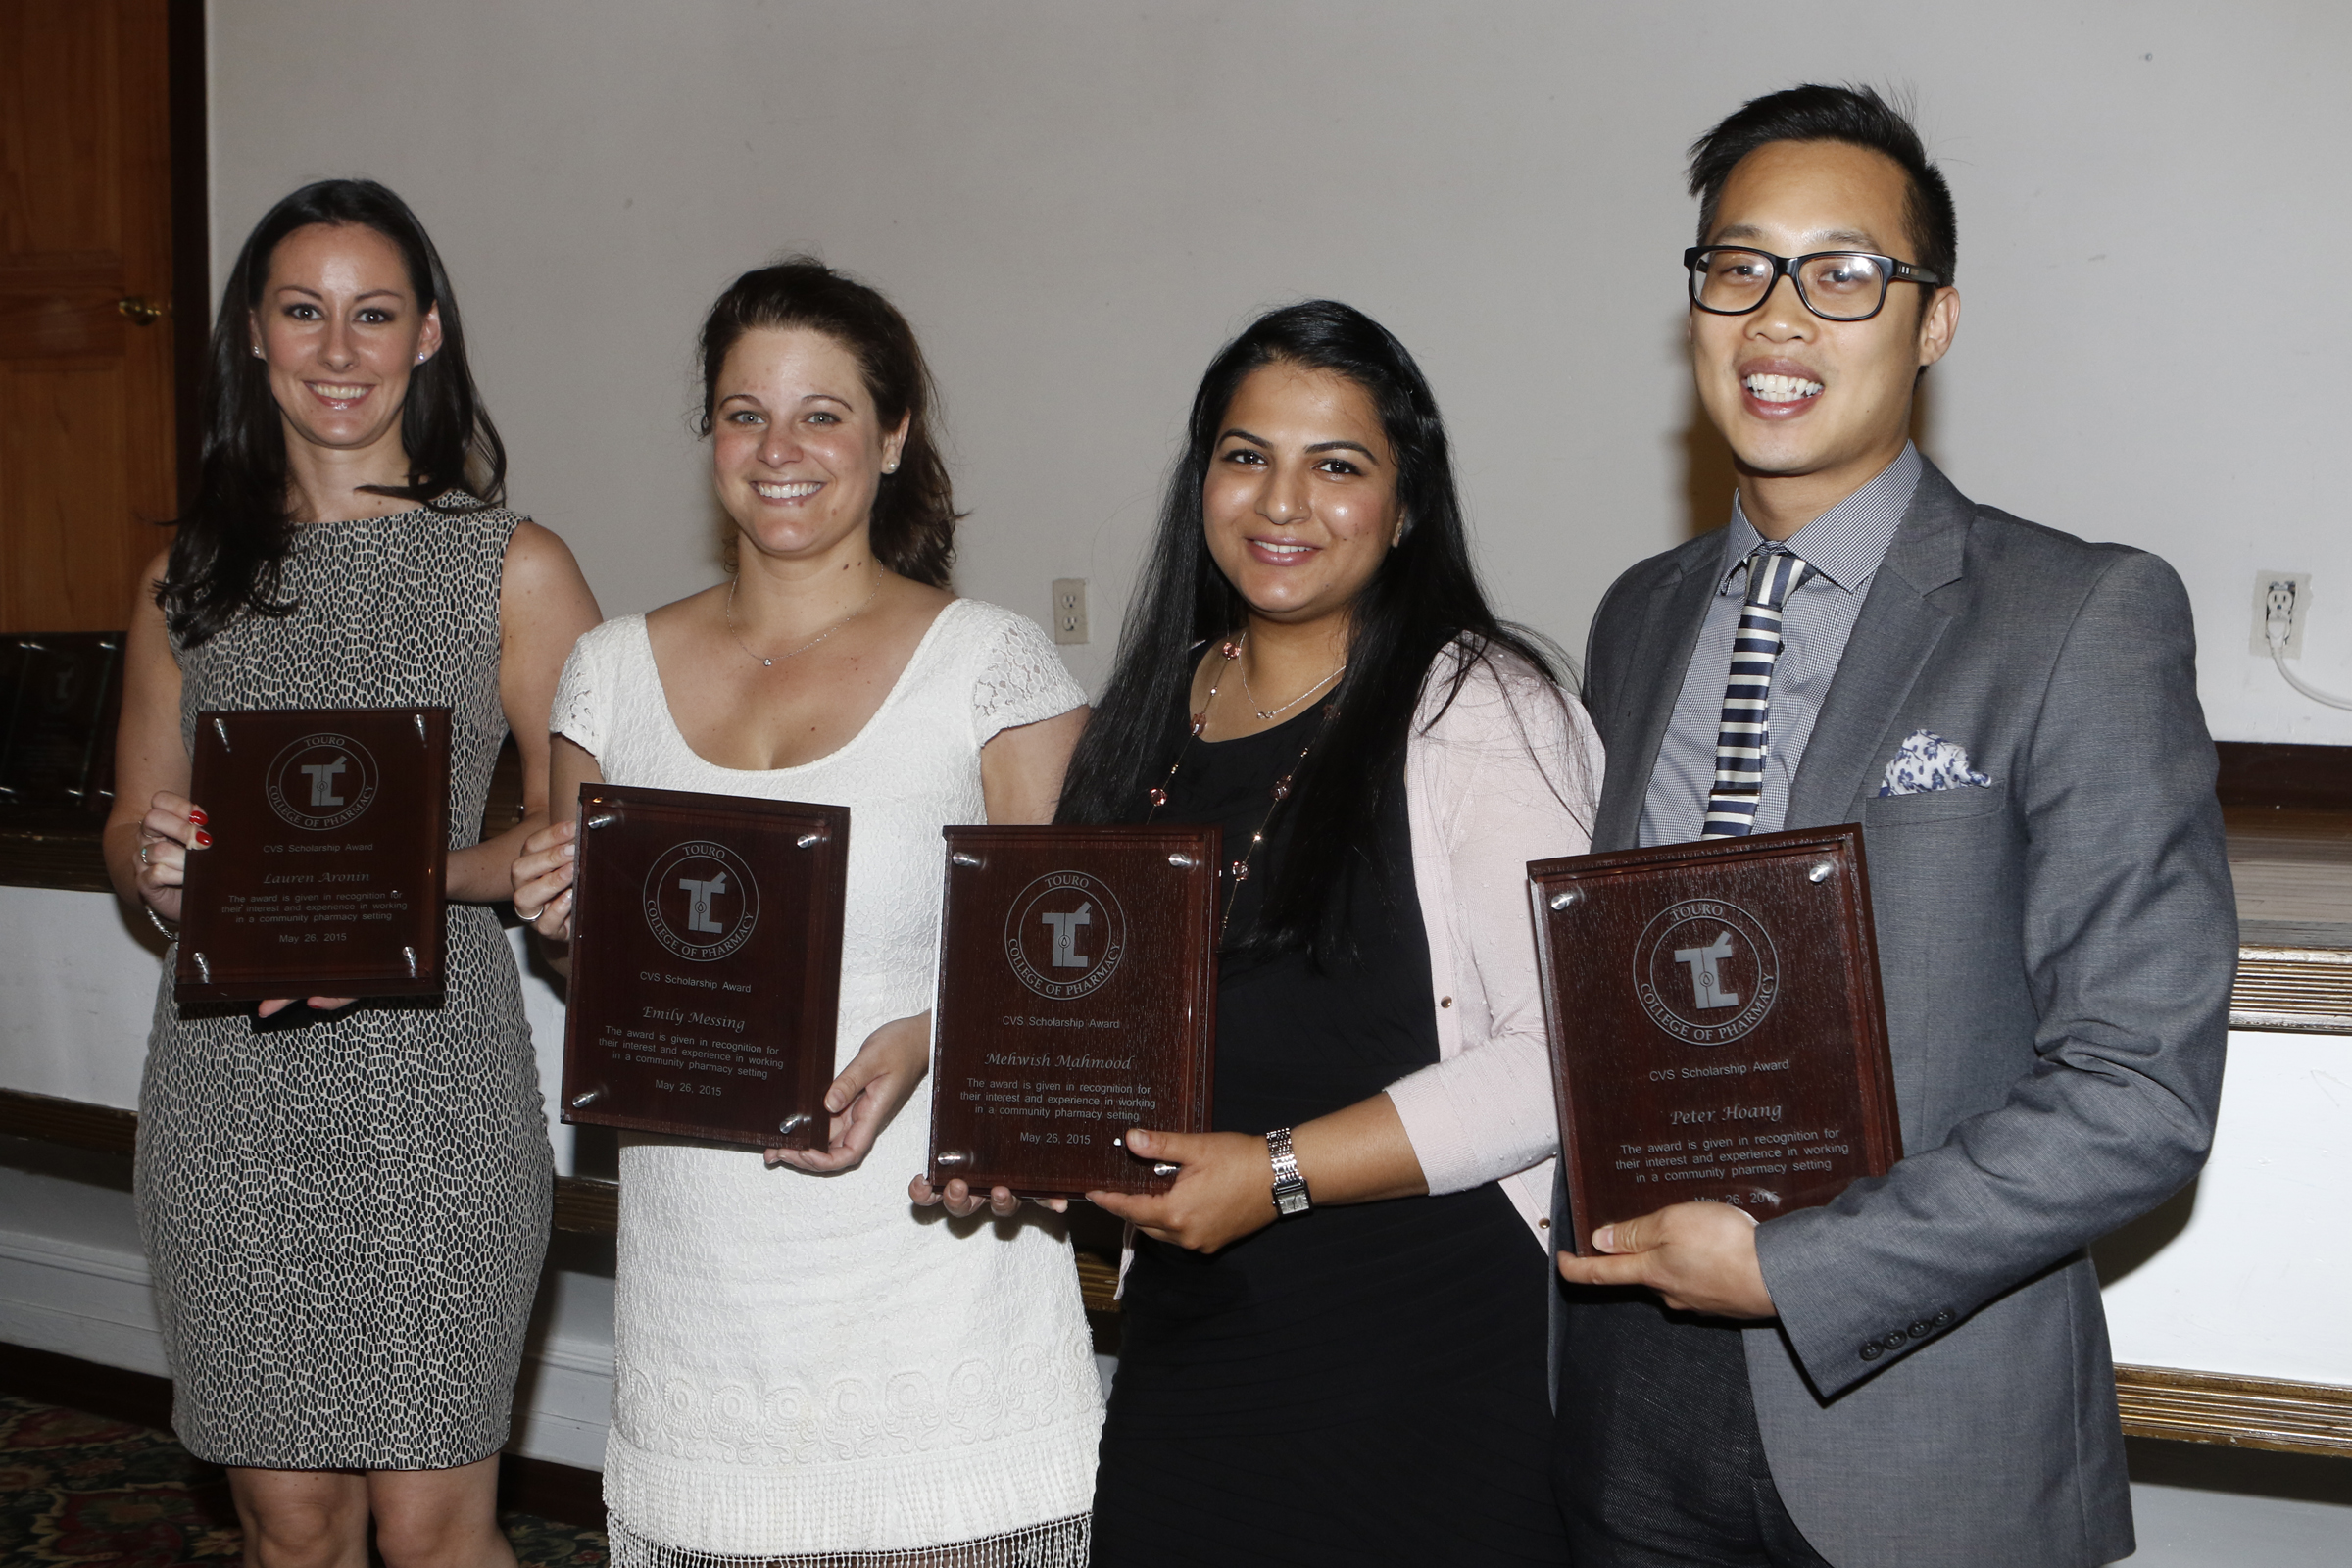 Frpm L-R: Lauren Aronin, Emily Messing, Mehwish Mahmood and Peter Hoang pose with their CVS Scholarship Awards.